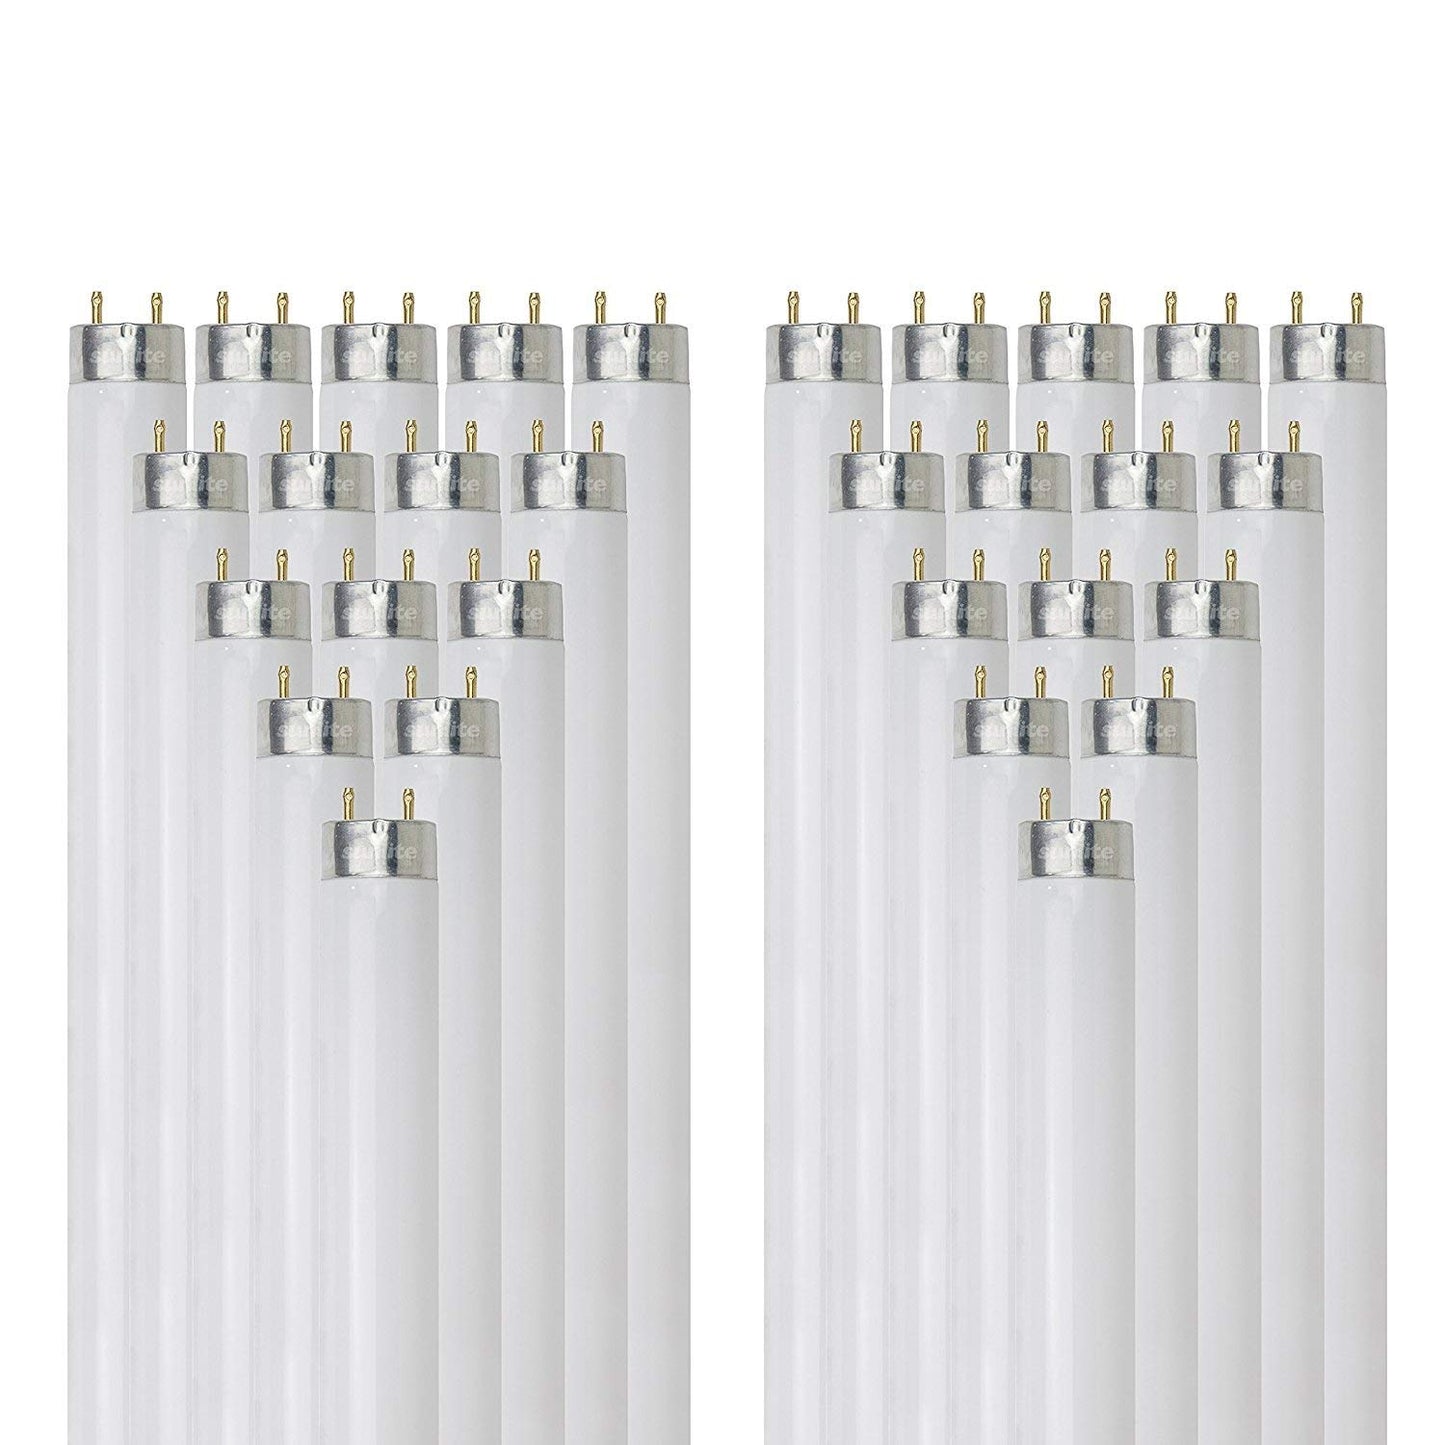 Sunlite 58 Watt T8 High Performance Straight Tube, Medium Bi-Pin Base, Neutral White